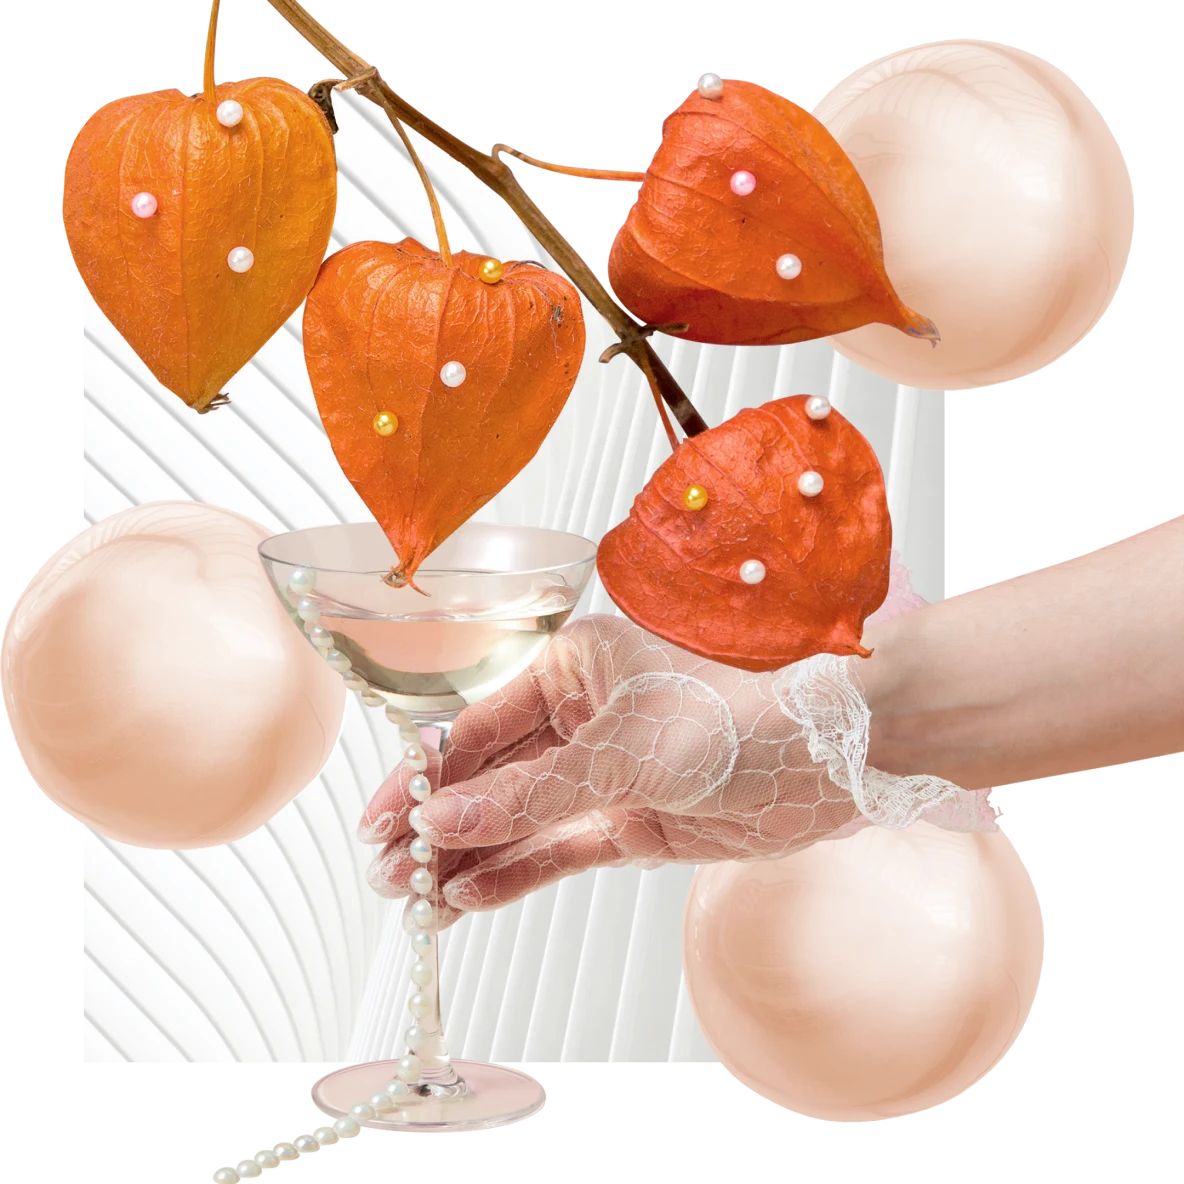 Empat polong physalis oranye pada cabang tipis. Latar belakang tiga mutiara oranye tembus pandang, gelas martini dipegang oleh tangan dengan sarung tangan renda dan untaian mutiara serta pola kipas putih.
